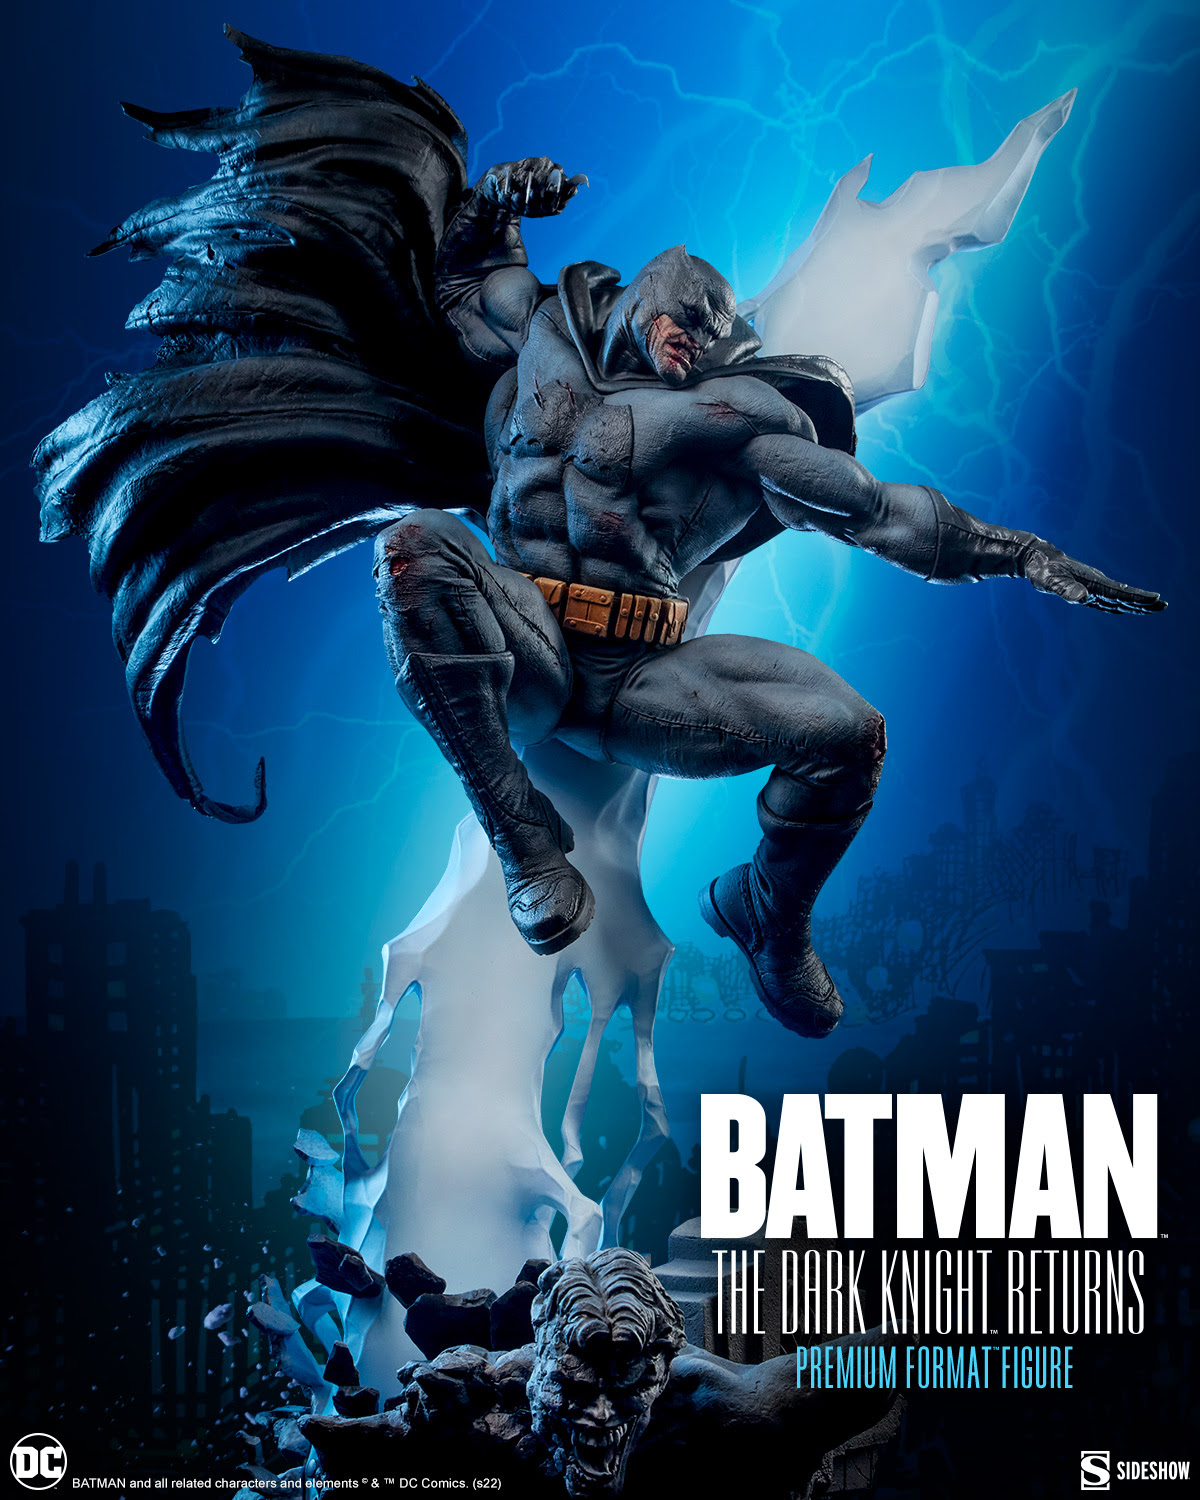 Batman: The Dark Knight Returns premium format figure revealed